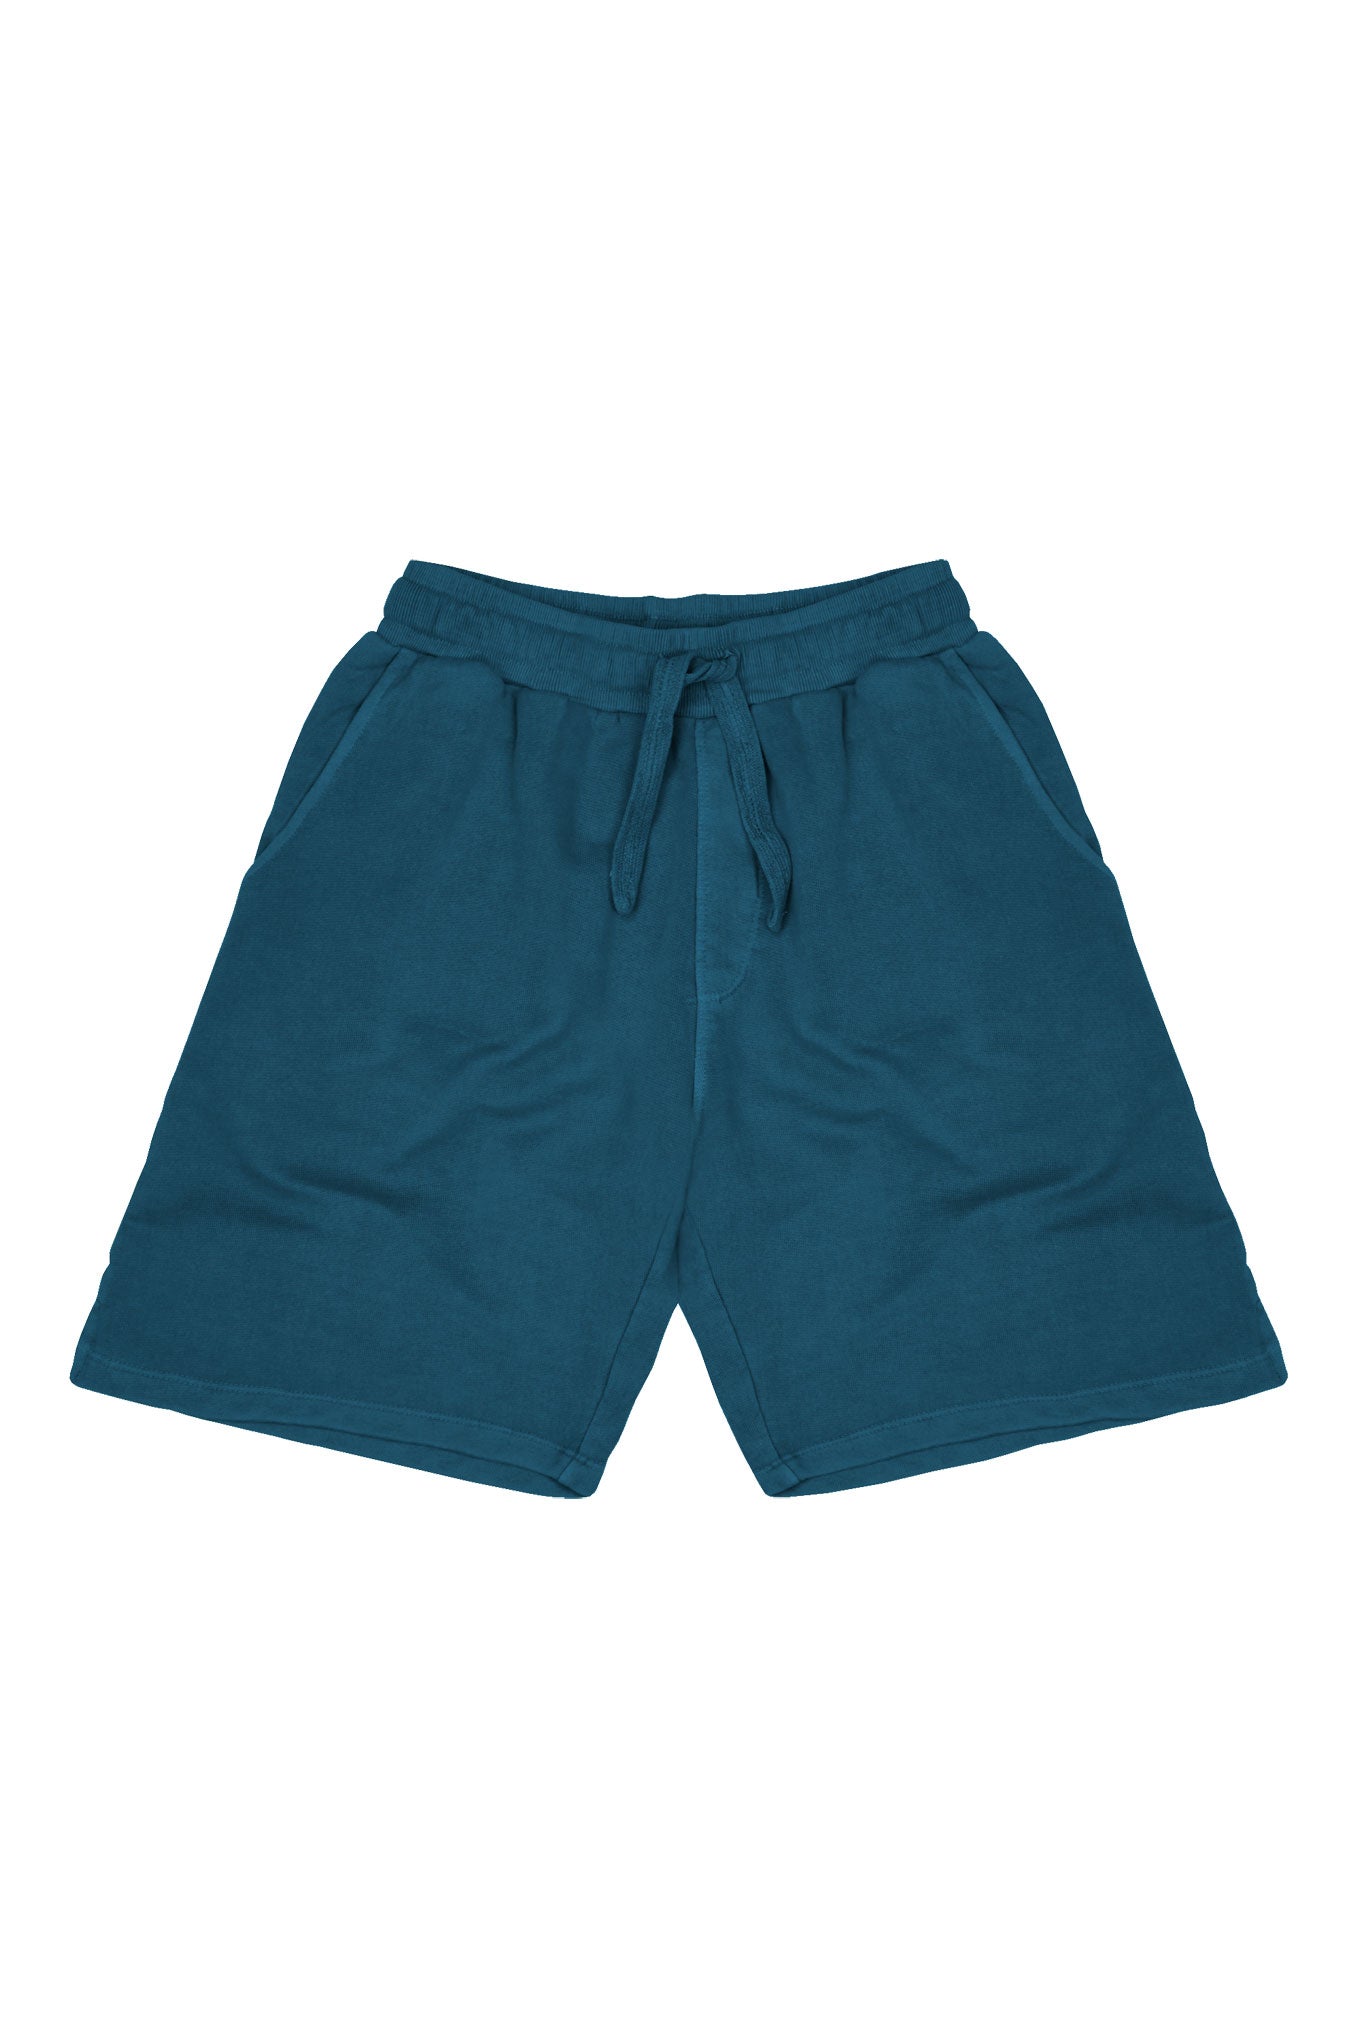 Trousers - FLIP - GOTS Organic Cotton Short Teal Blue